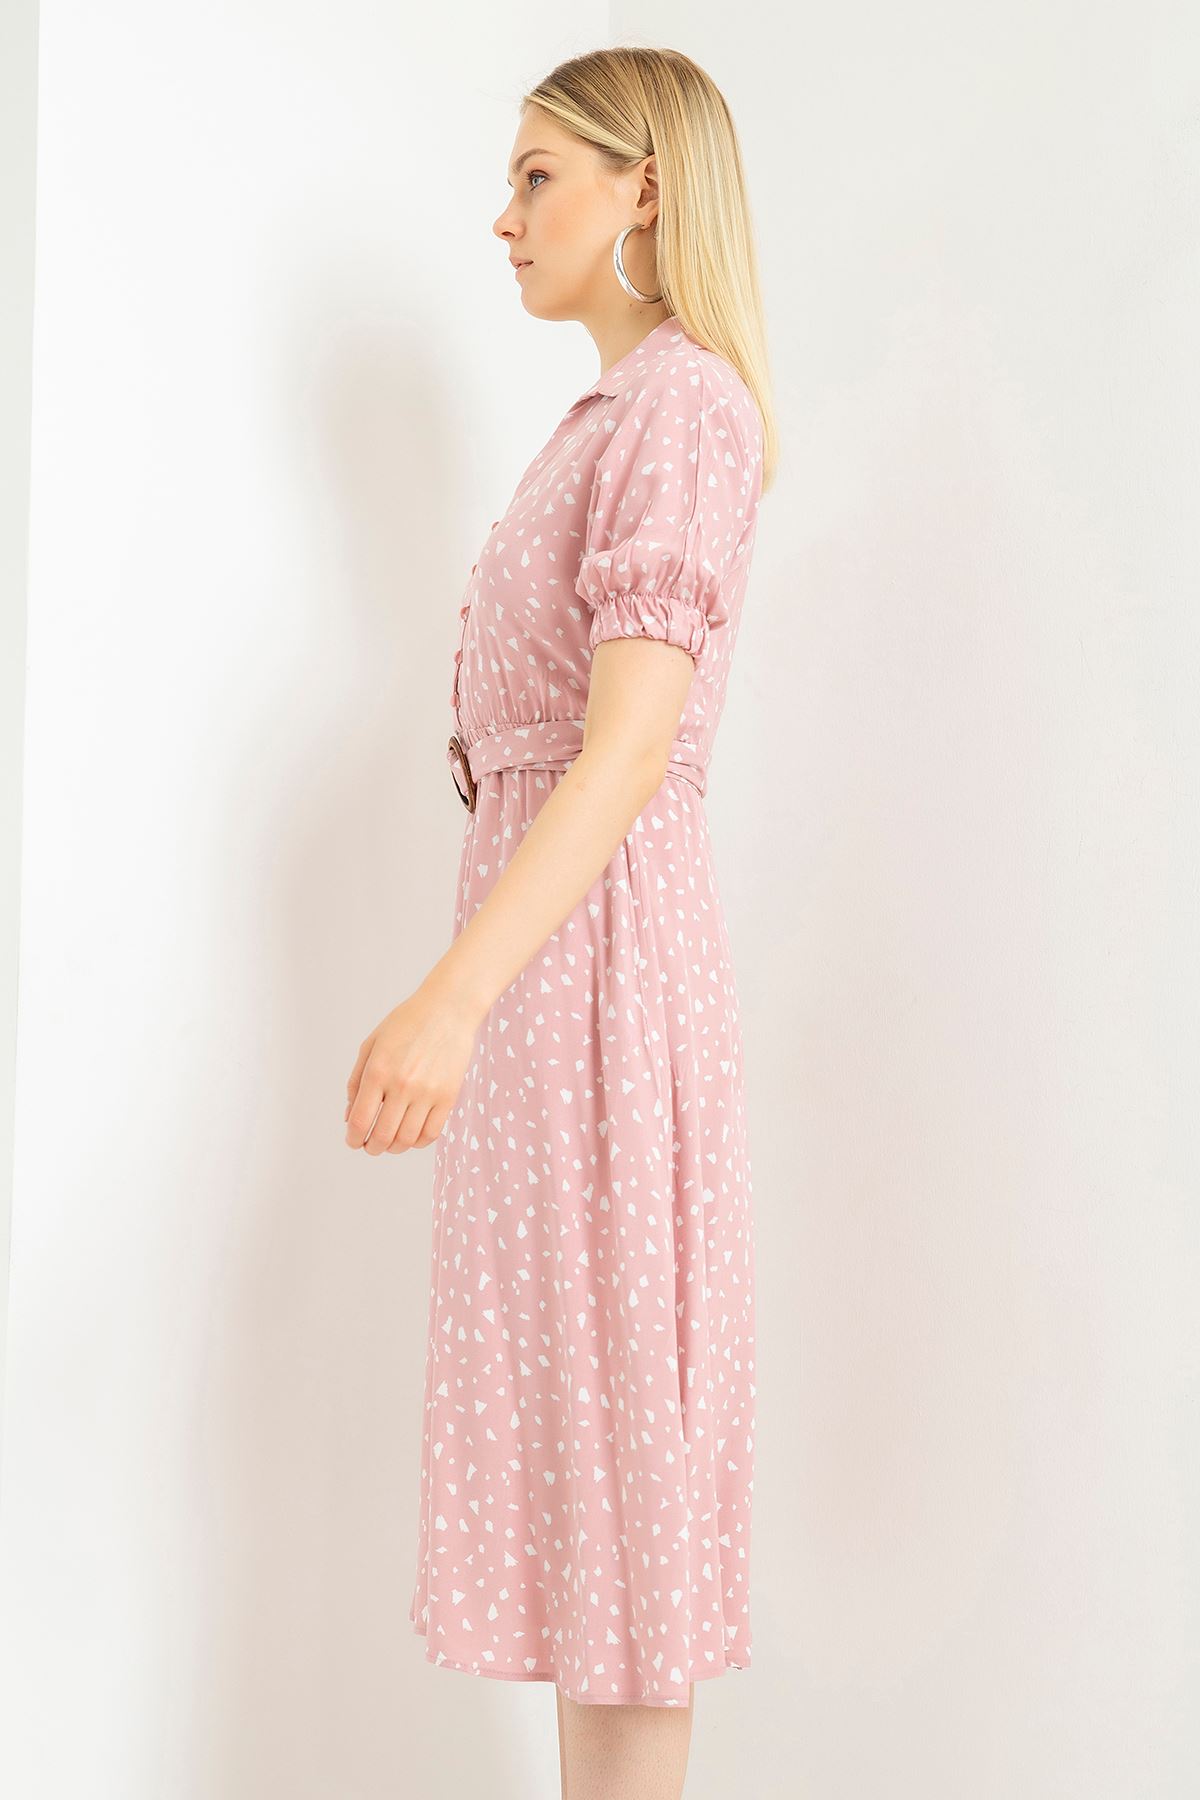 Viscose Fabric Elastic Sleeve Shirt Collar Midi Crispy Print Women Dress - Light Pink